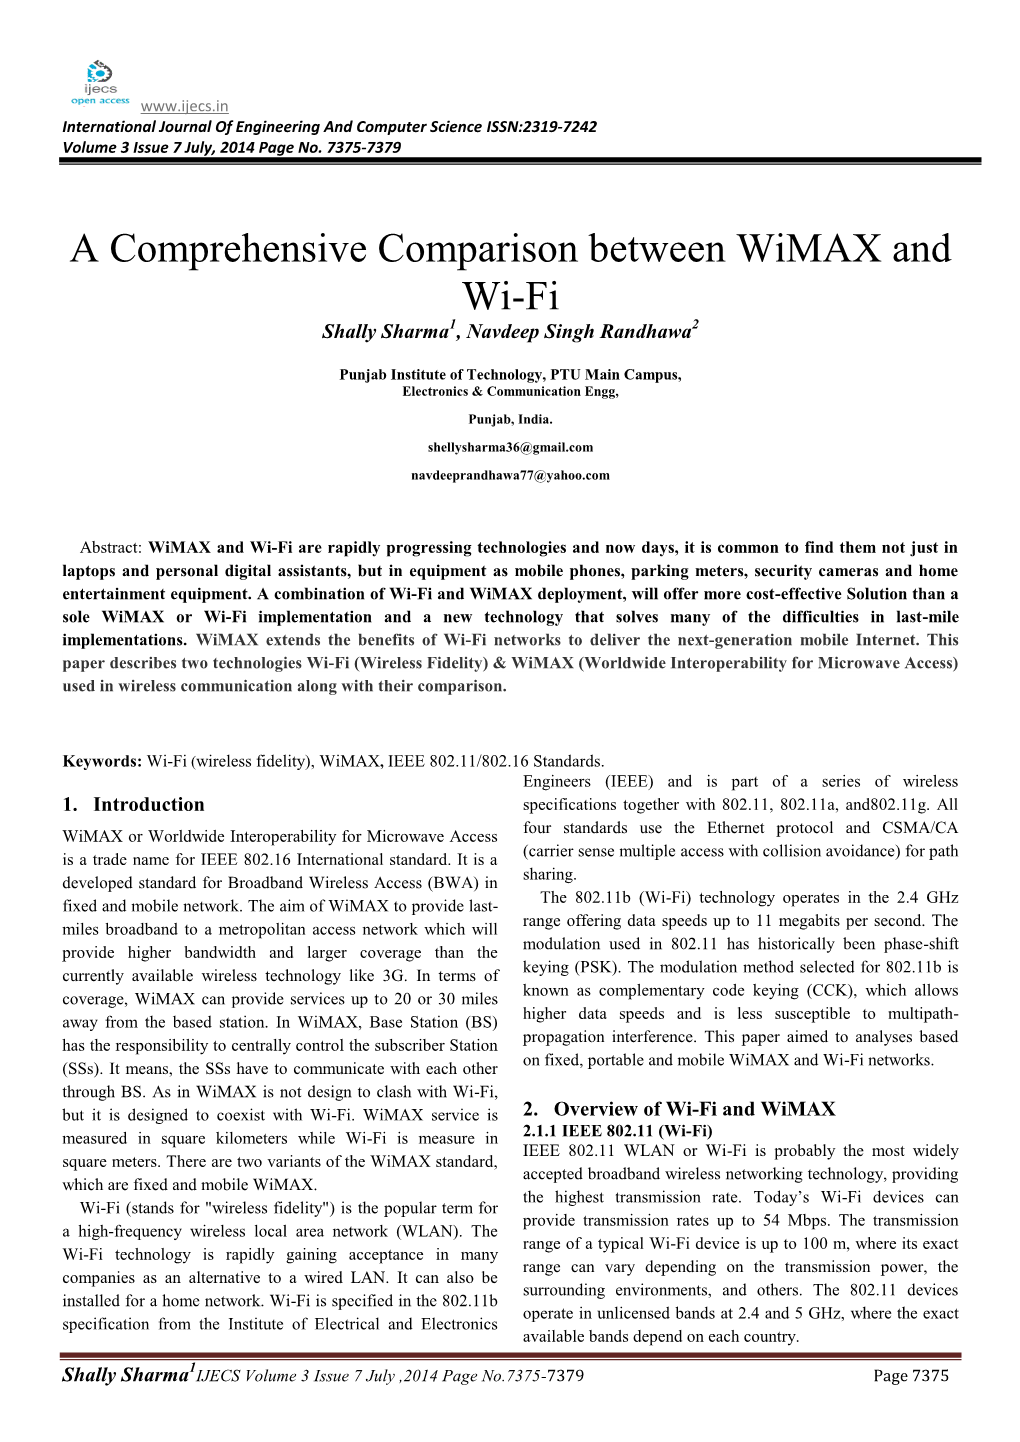 A Comprehensive Comparison Between Wimax and Wi-Fi Shally Sharma1, Navdeep Singh Randhawa2